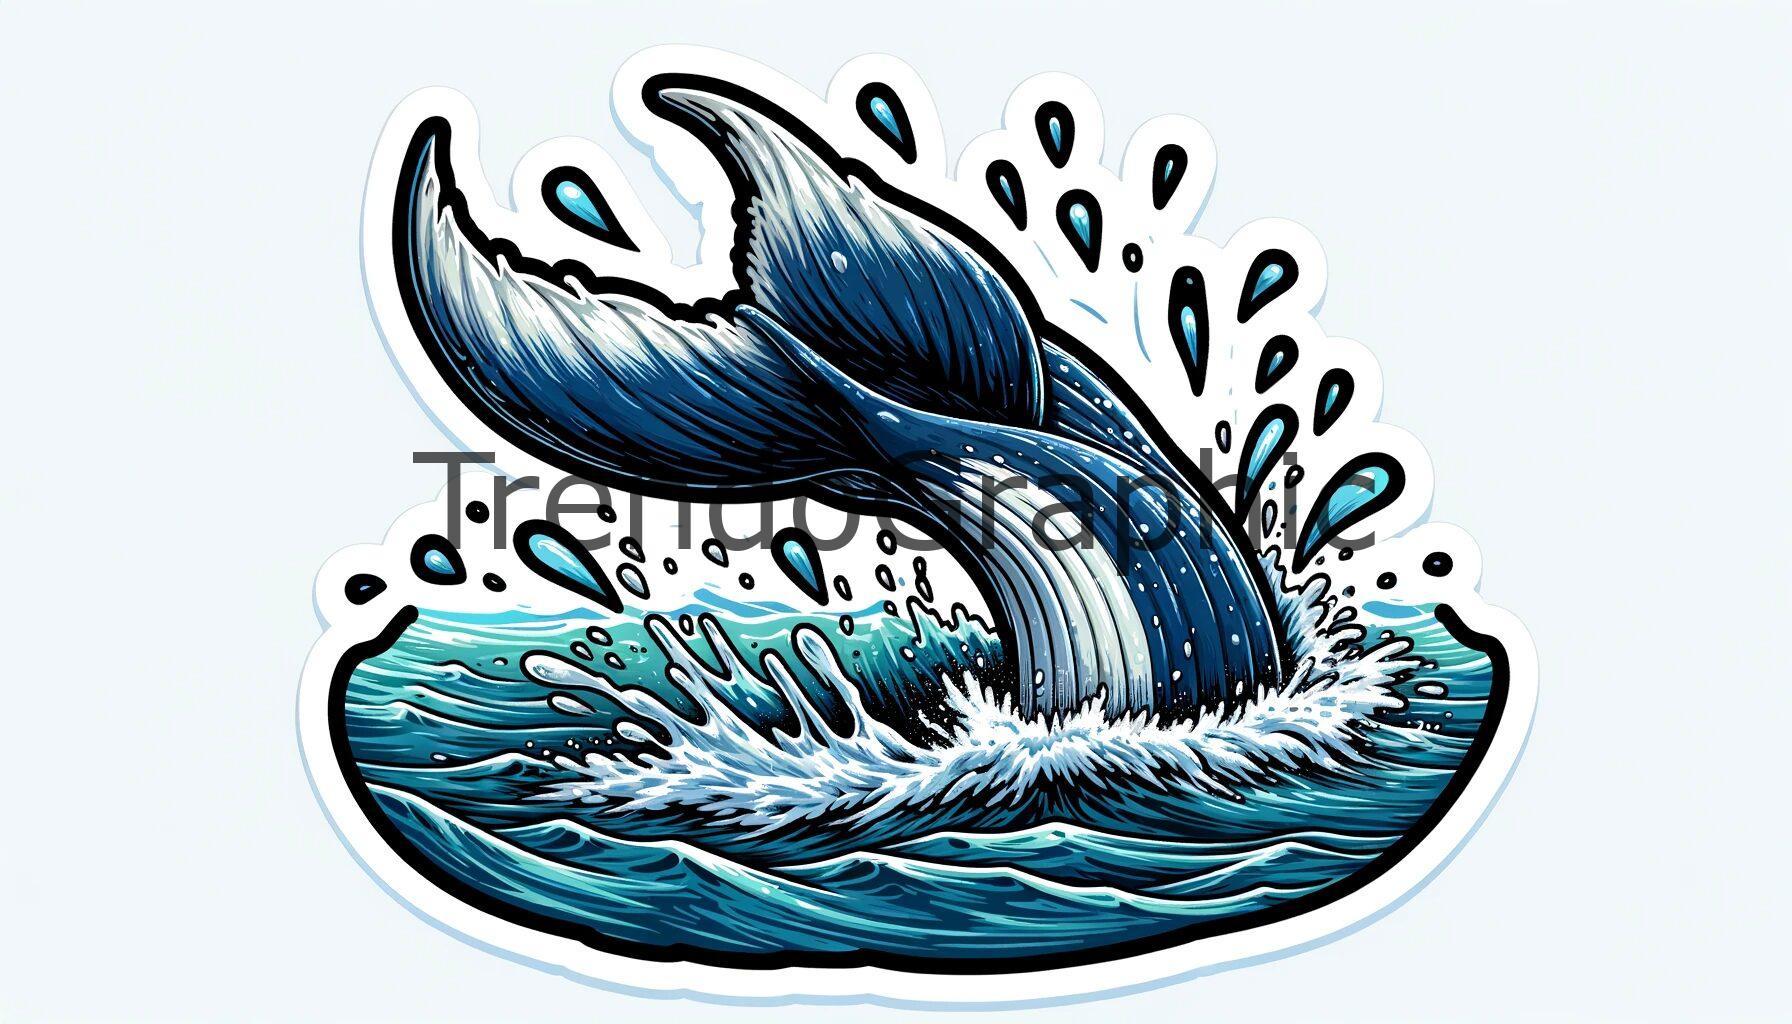 Dynamic Whale Tail Slap: Capturing Oceanic Power